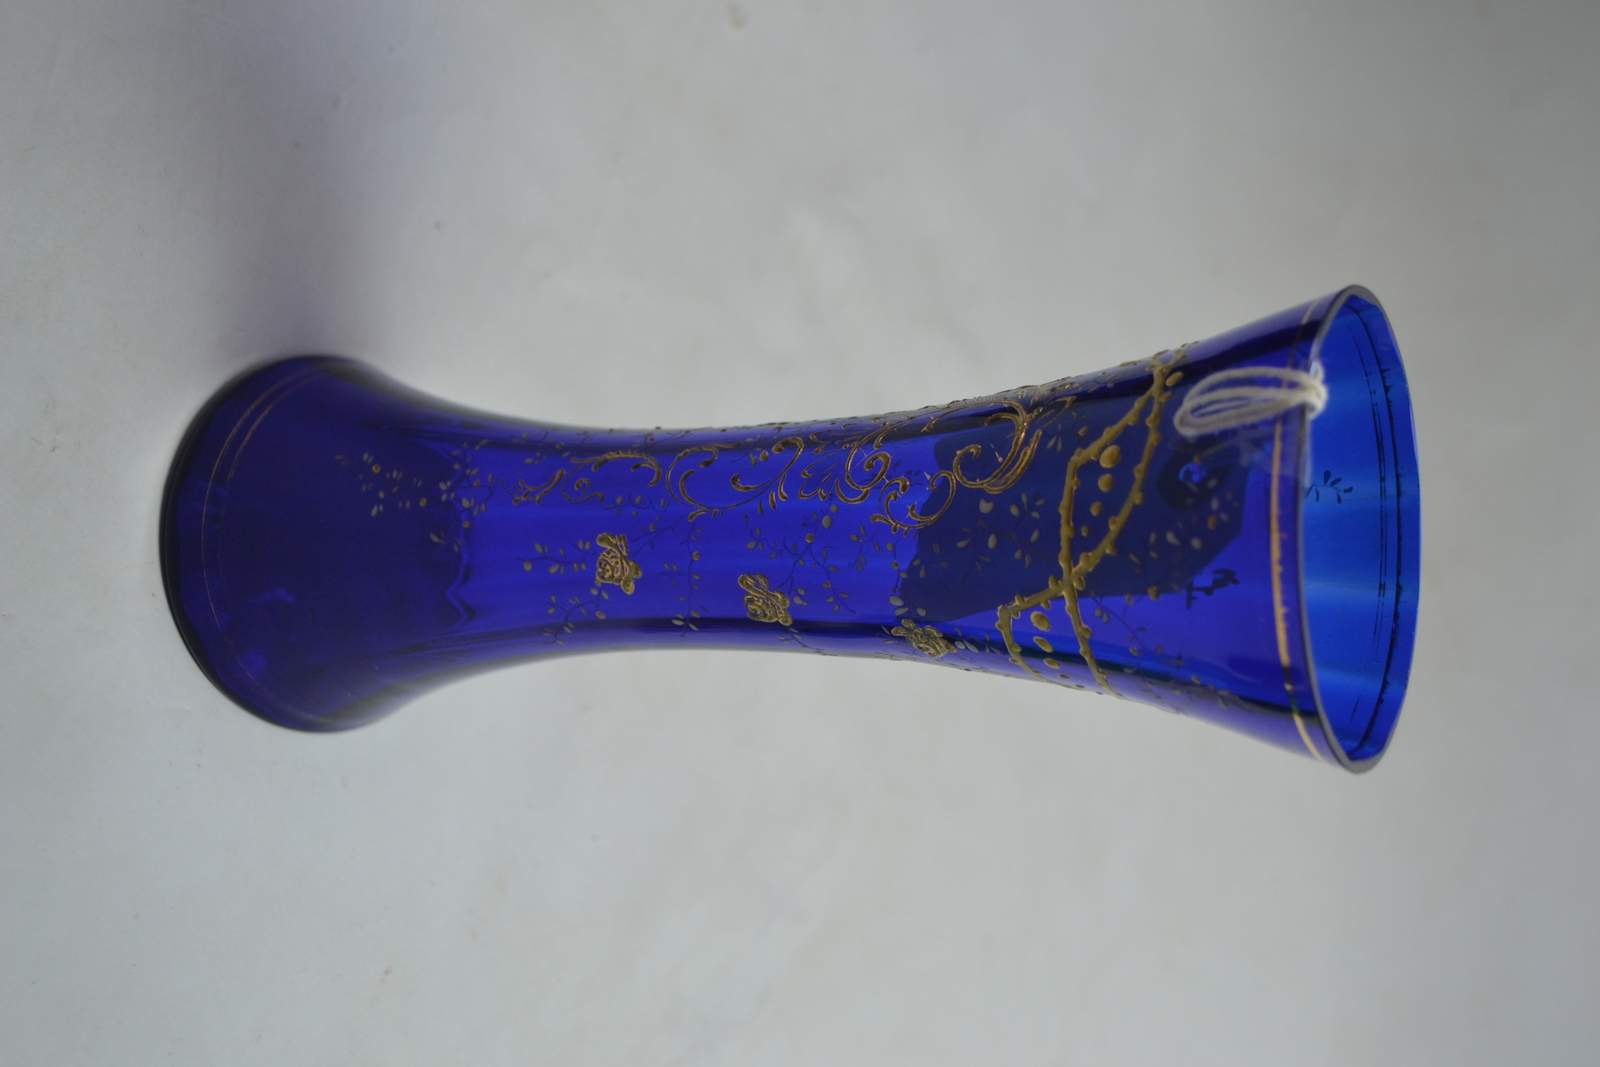 19th Century Bohemian Blue Enamel Vase